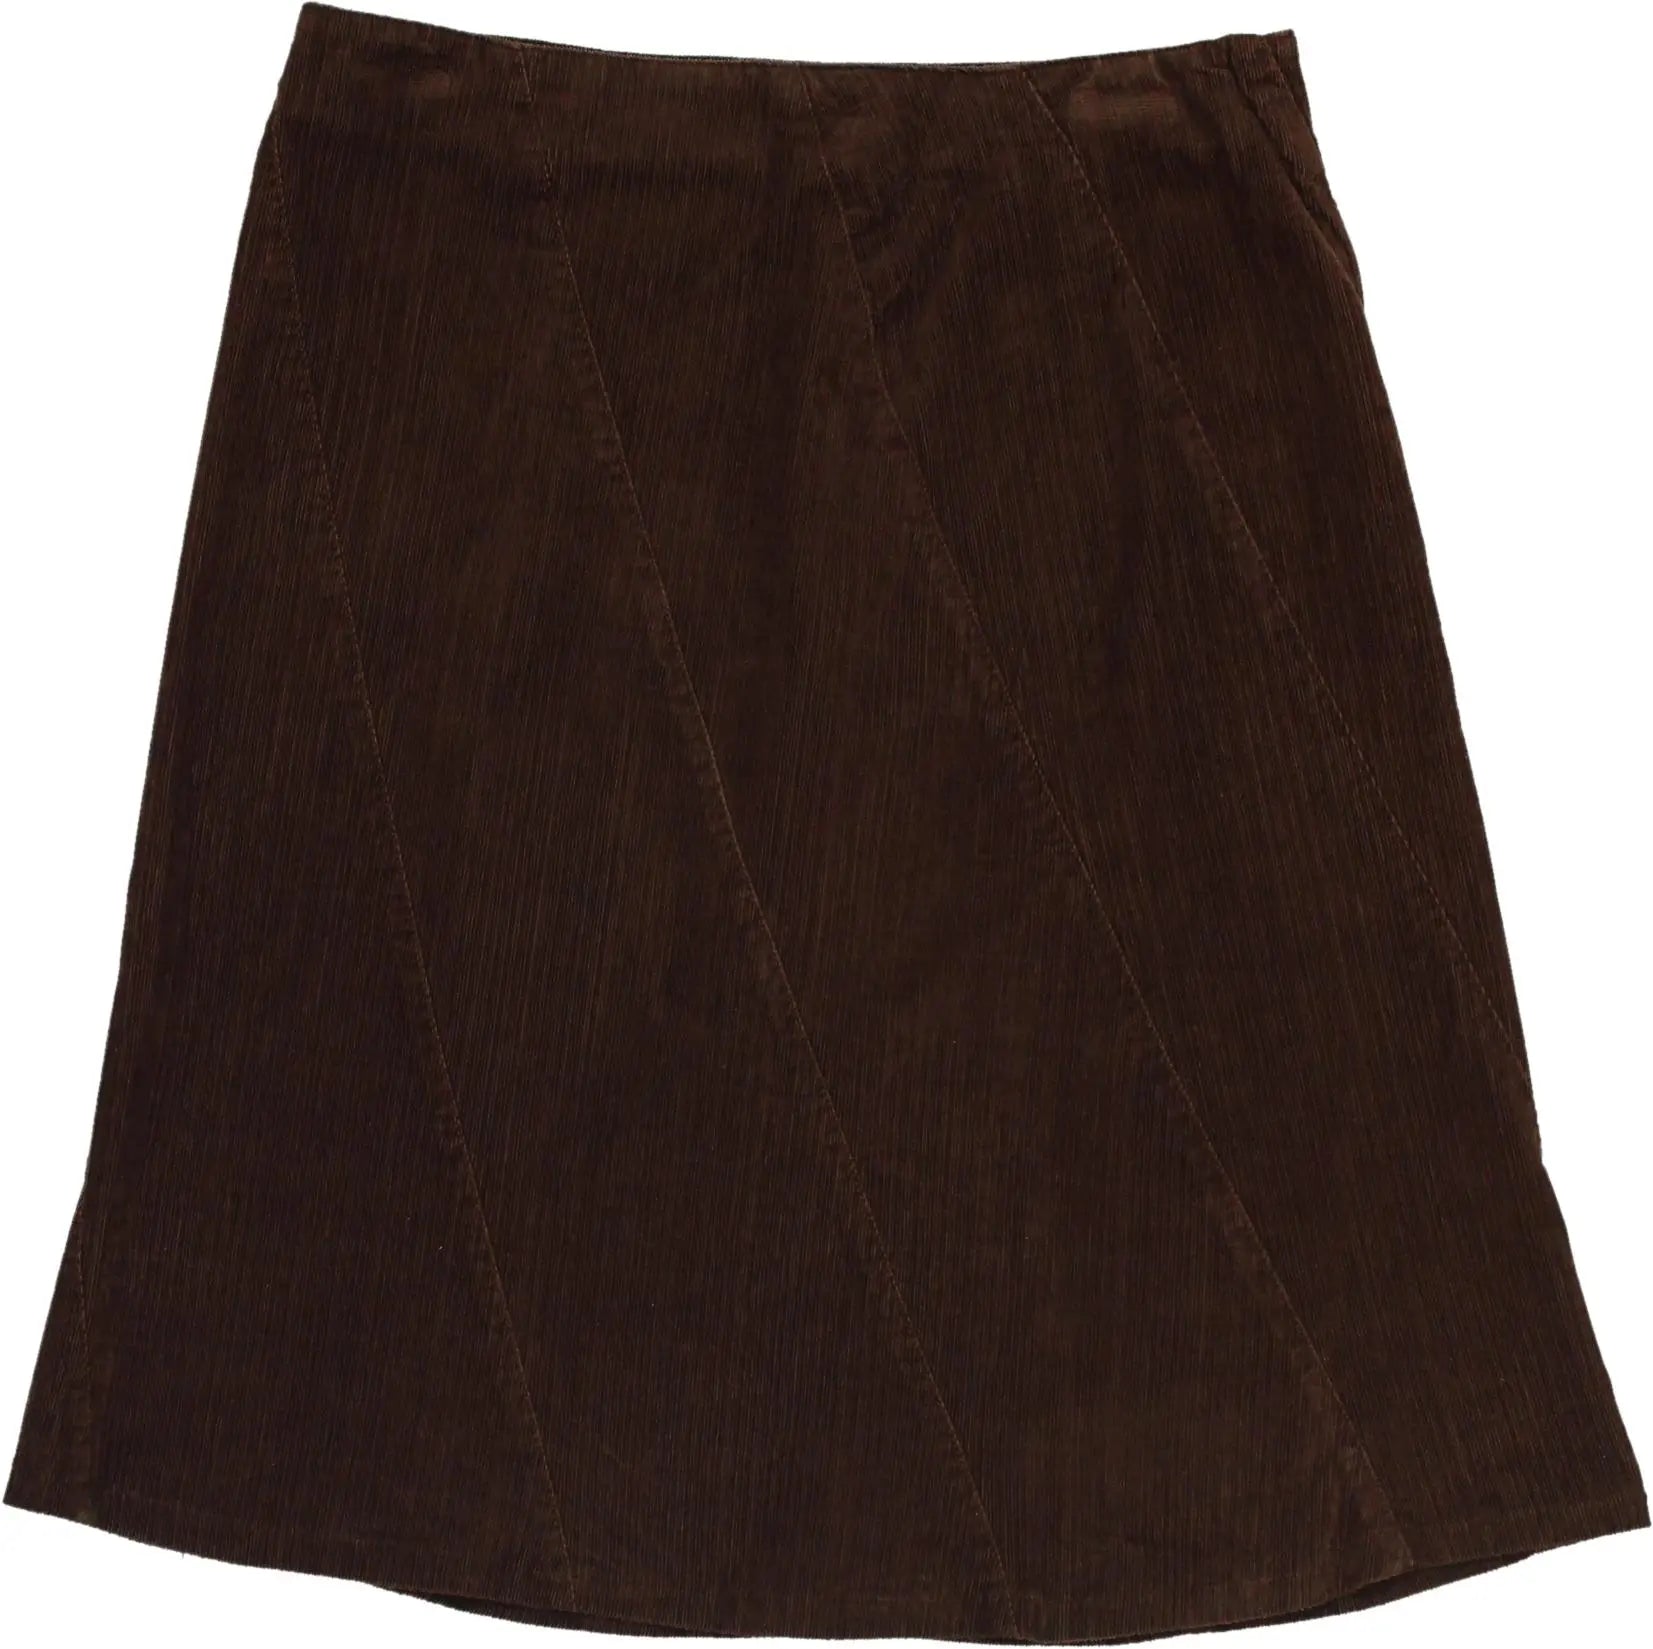 Morrison - Skirt- ThriftTale.com - Vintage and second handclothing